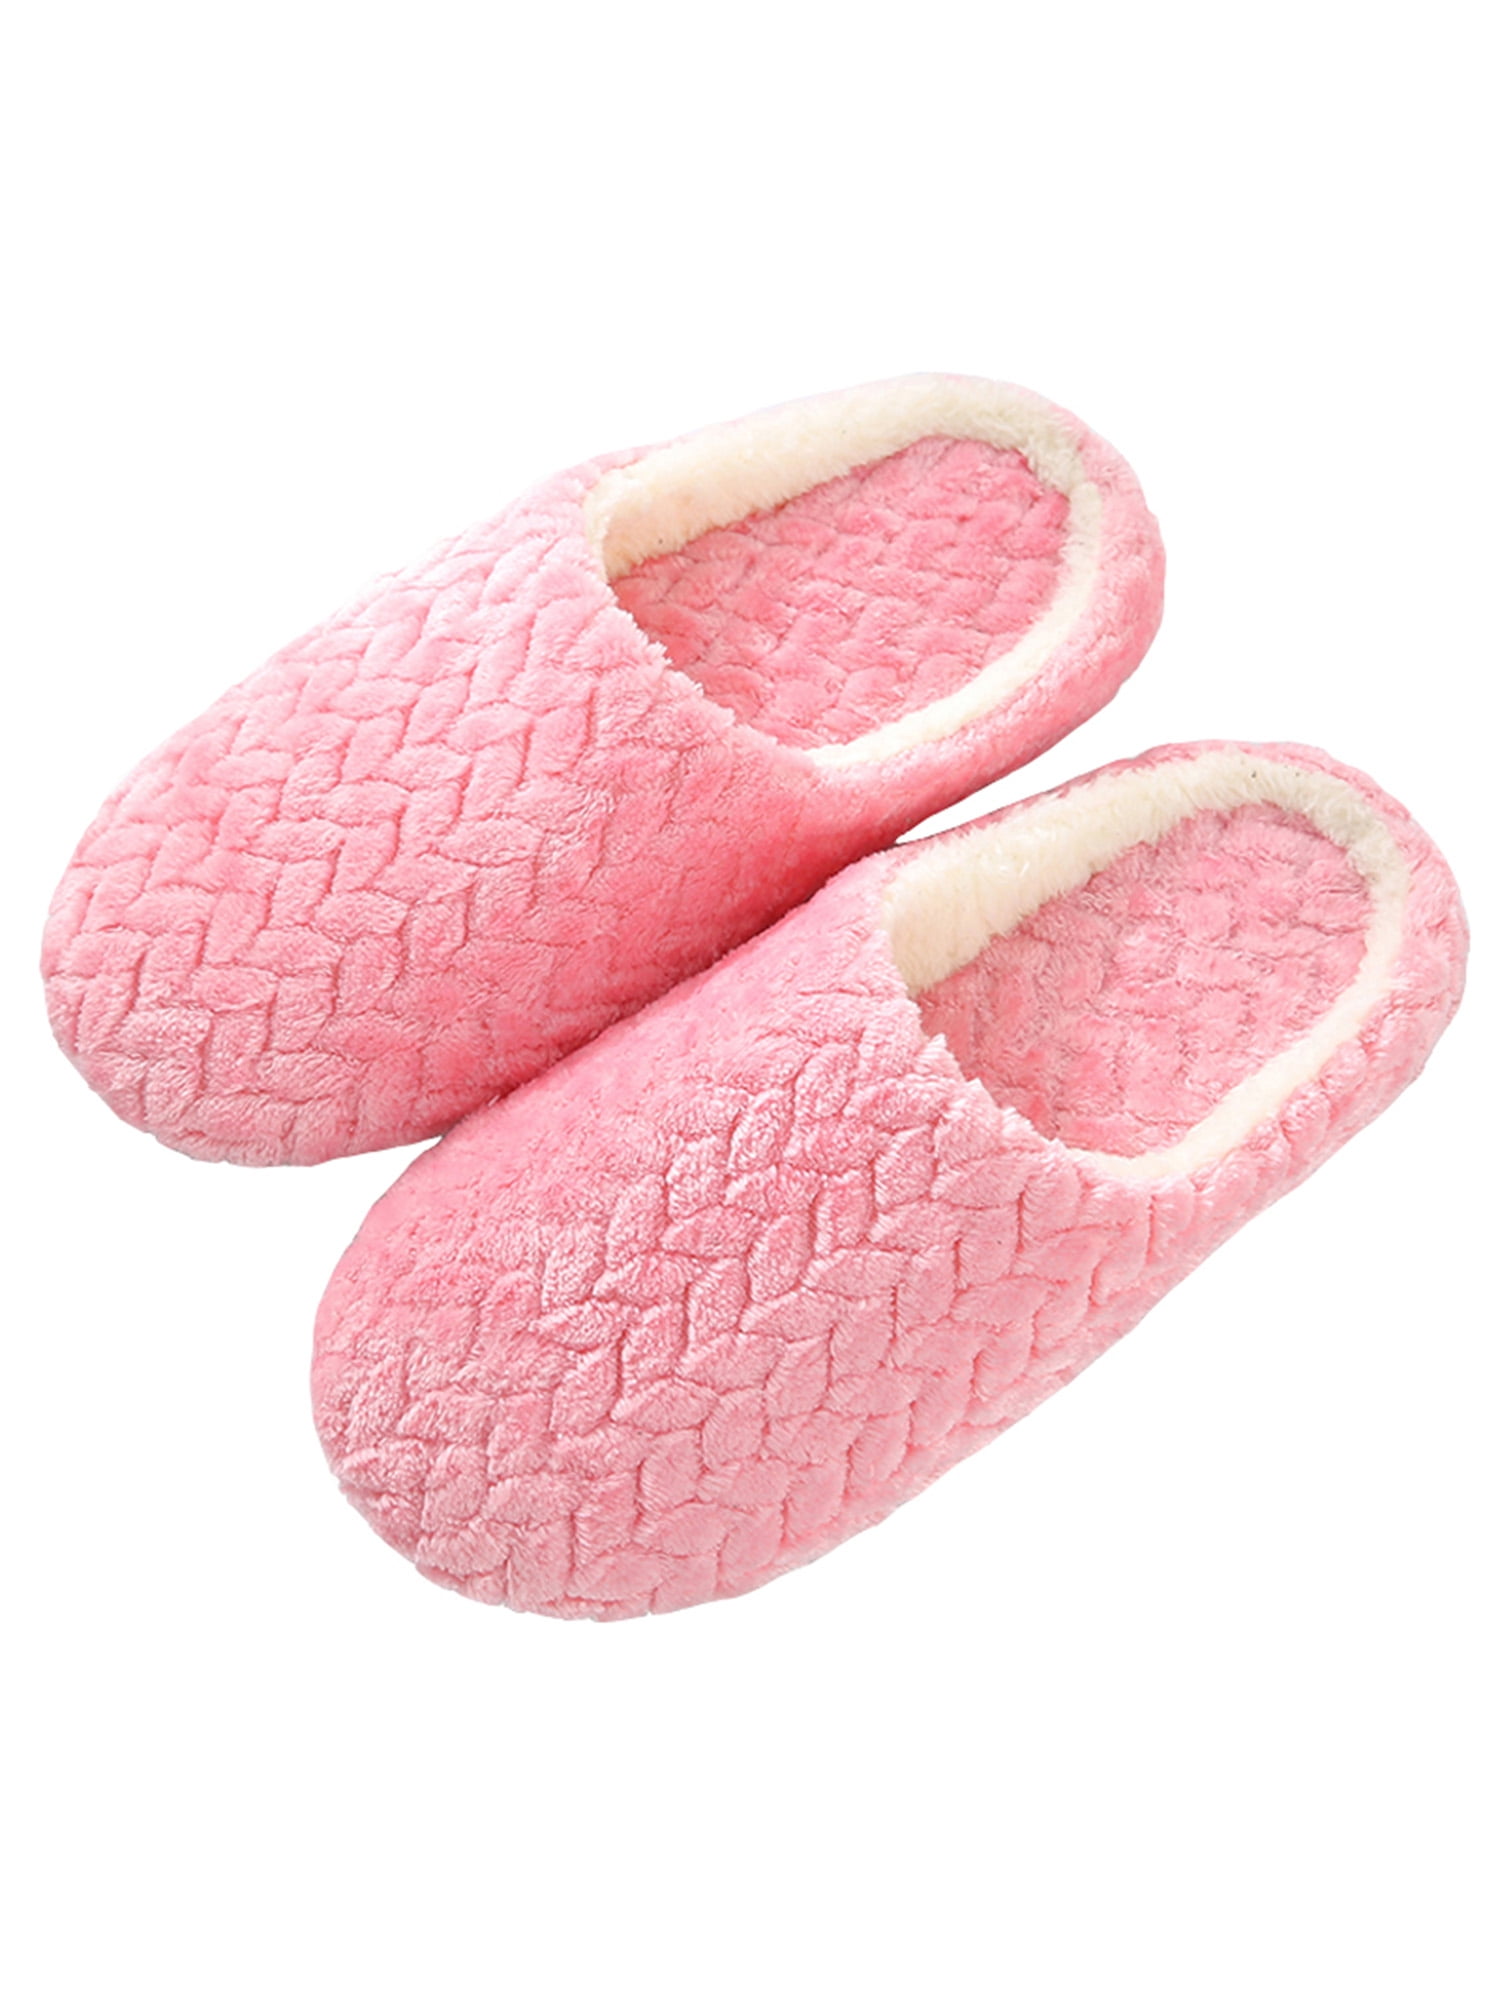 Womens Home Non Slip Soft Plush Slippers Winter Warm Sliders Shoes Size 4-11